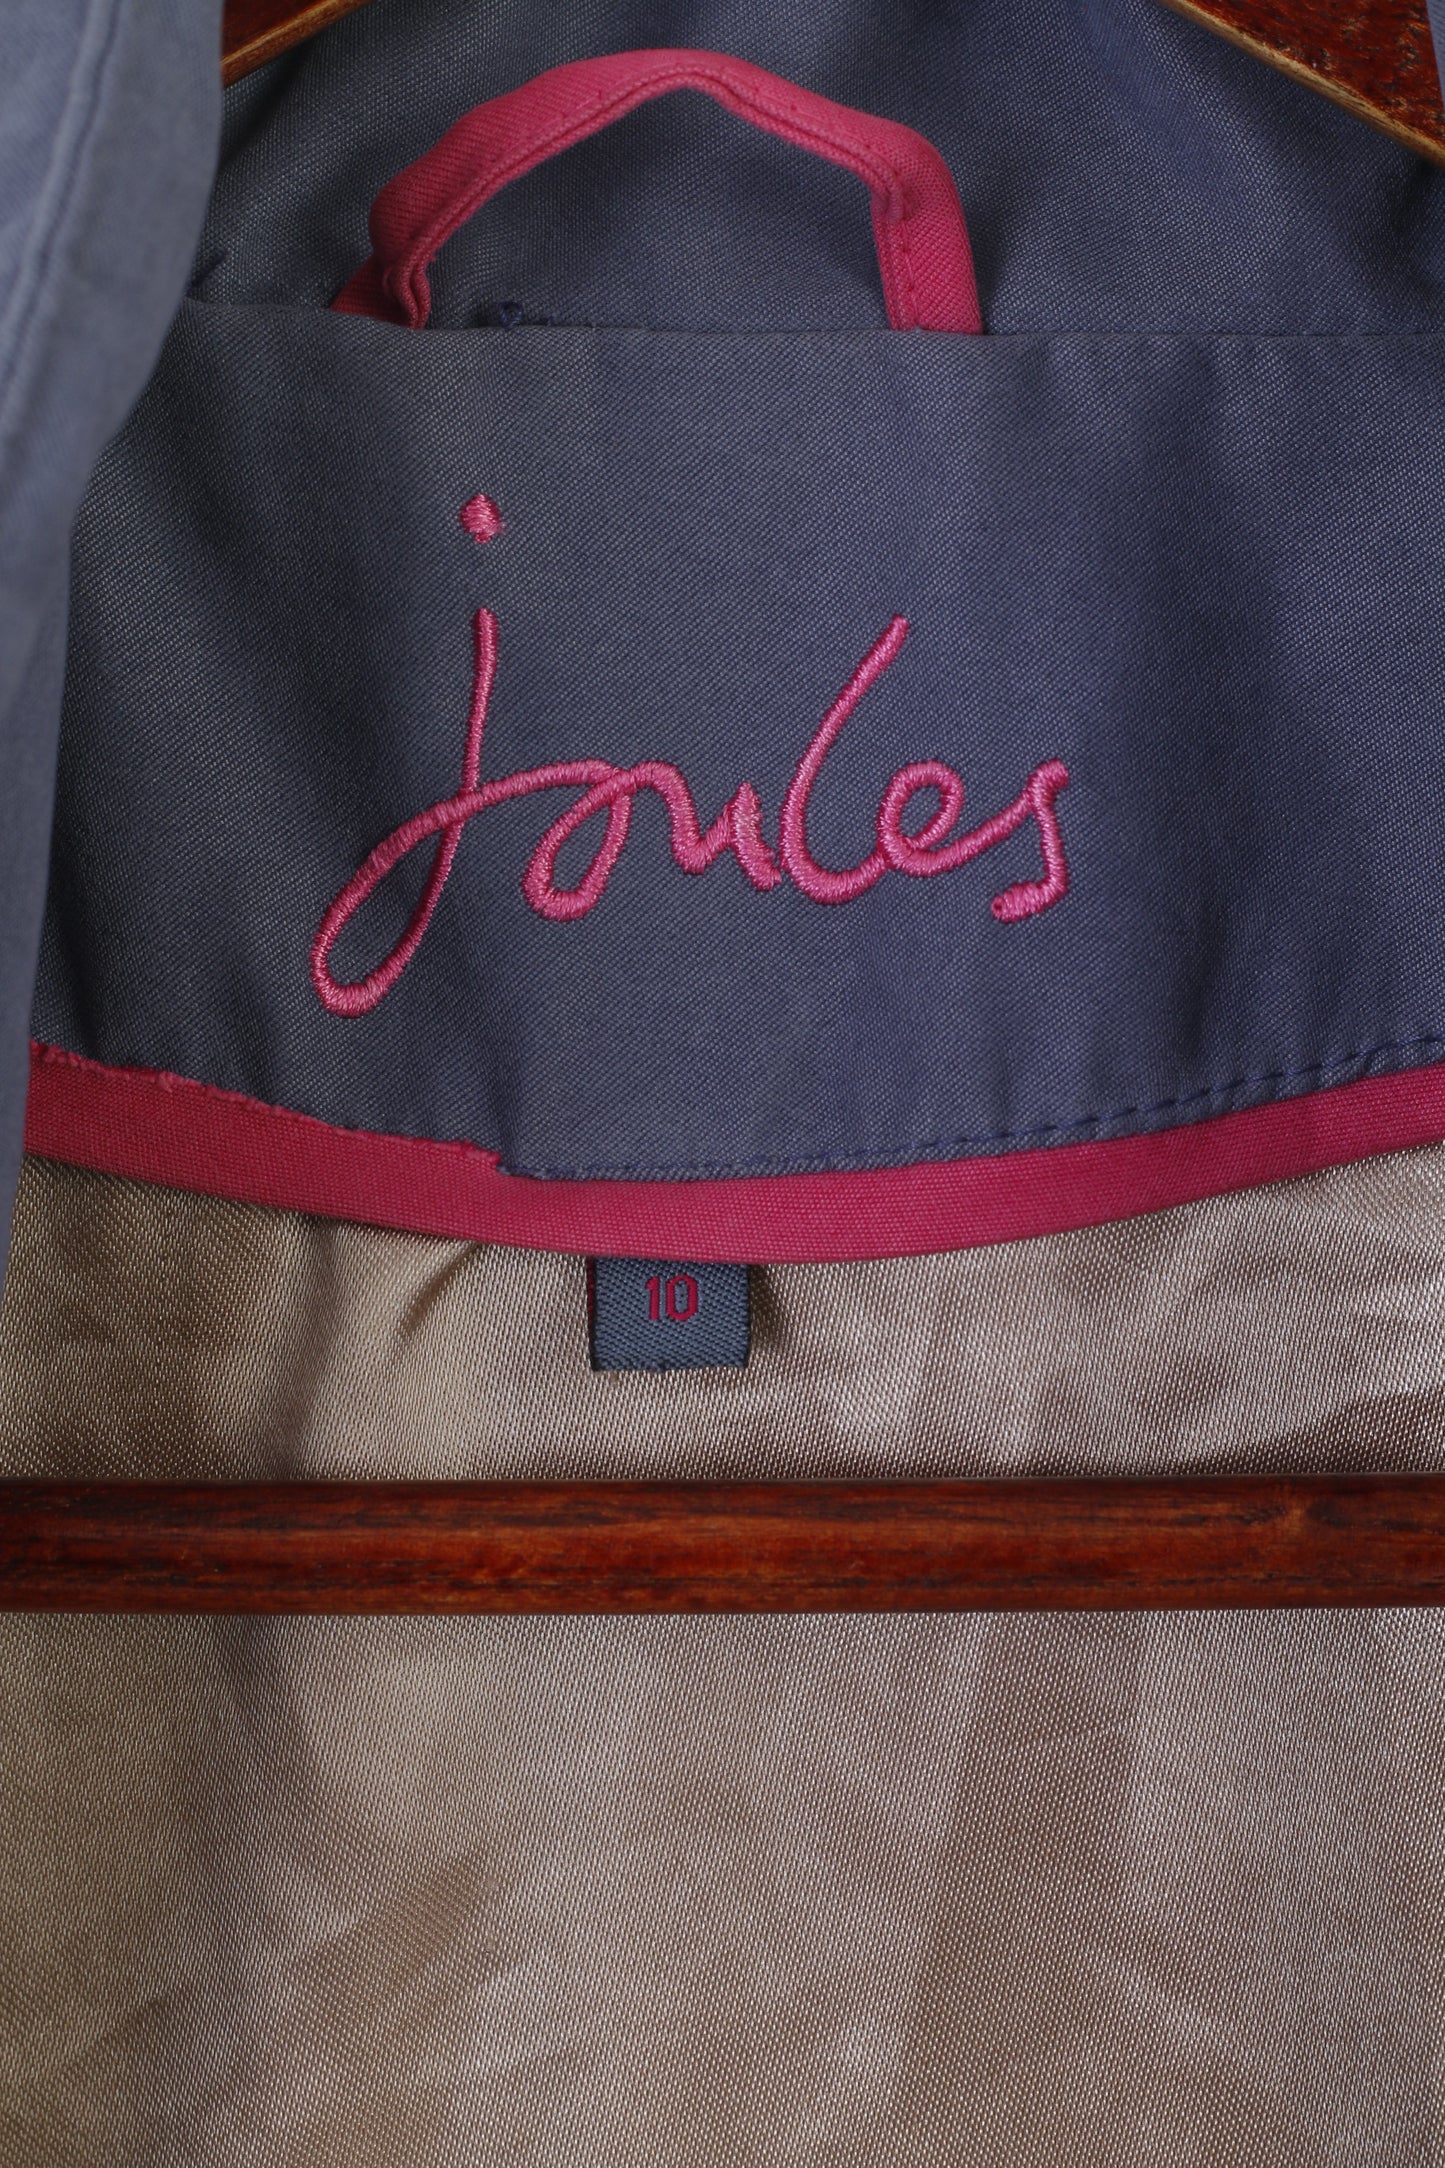 Joules Women 10 S Jacket Violet Padded Full Zipper Multi Pocket Classic Top